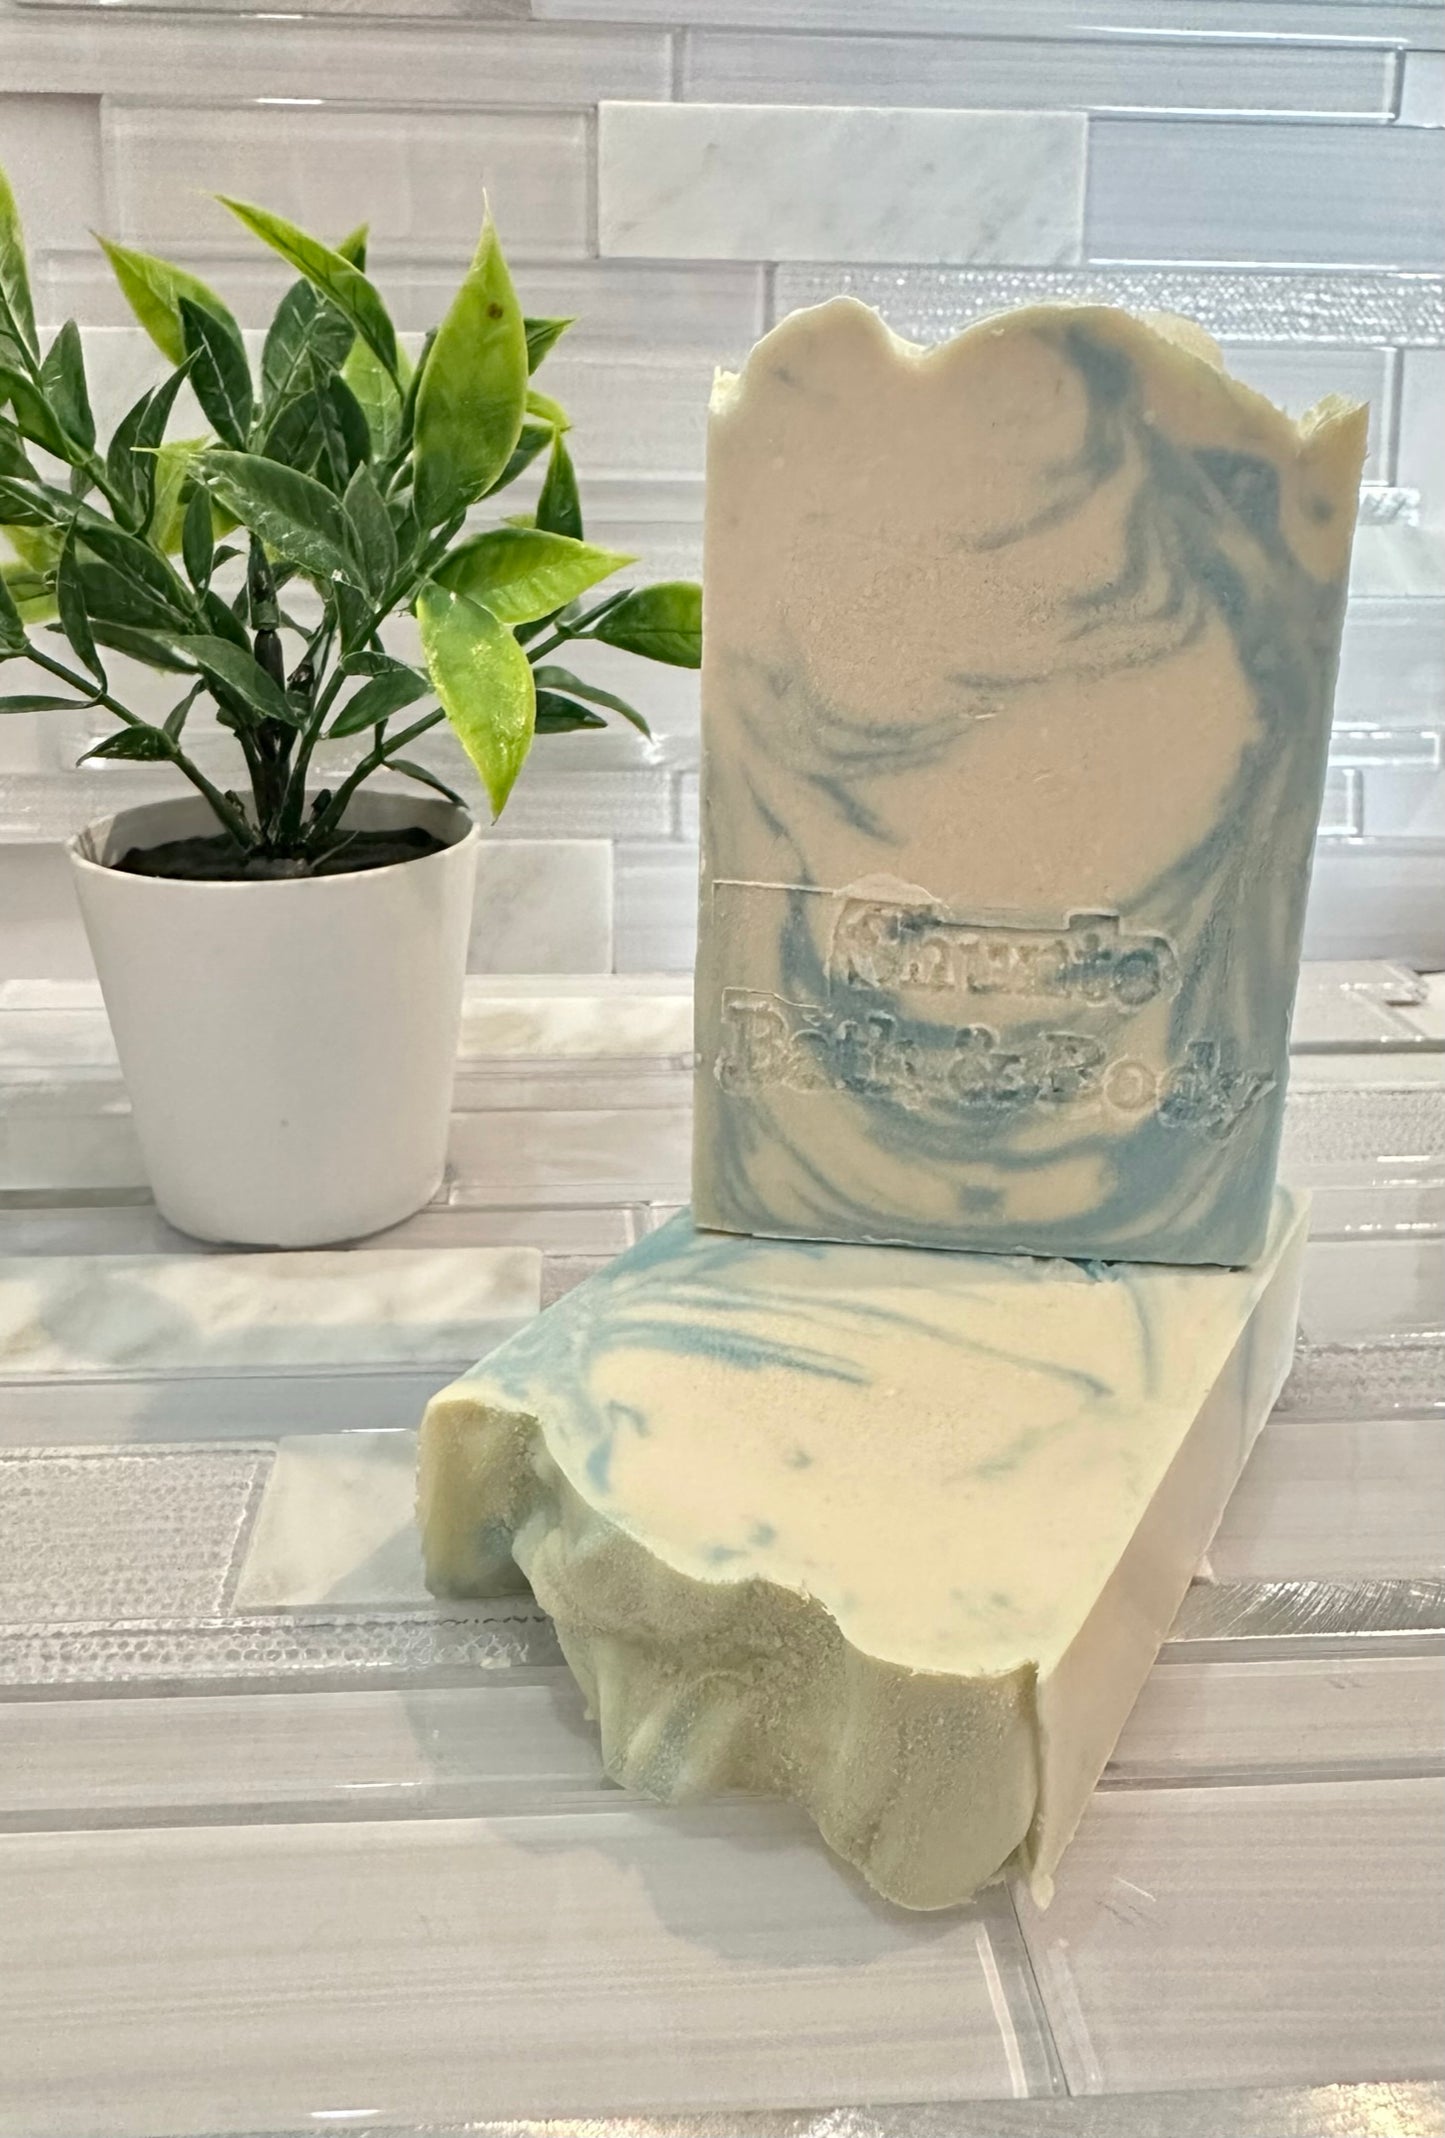 Legend Coconut Milk Soap